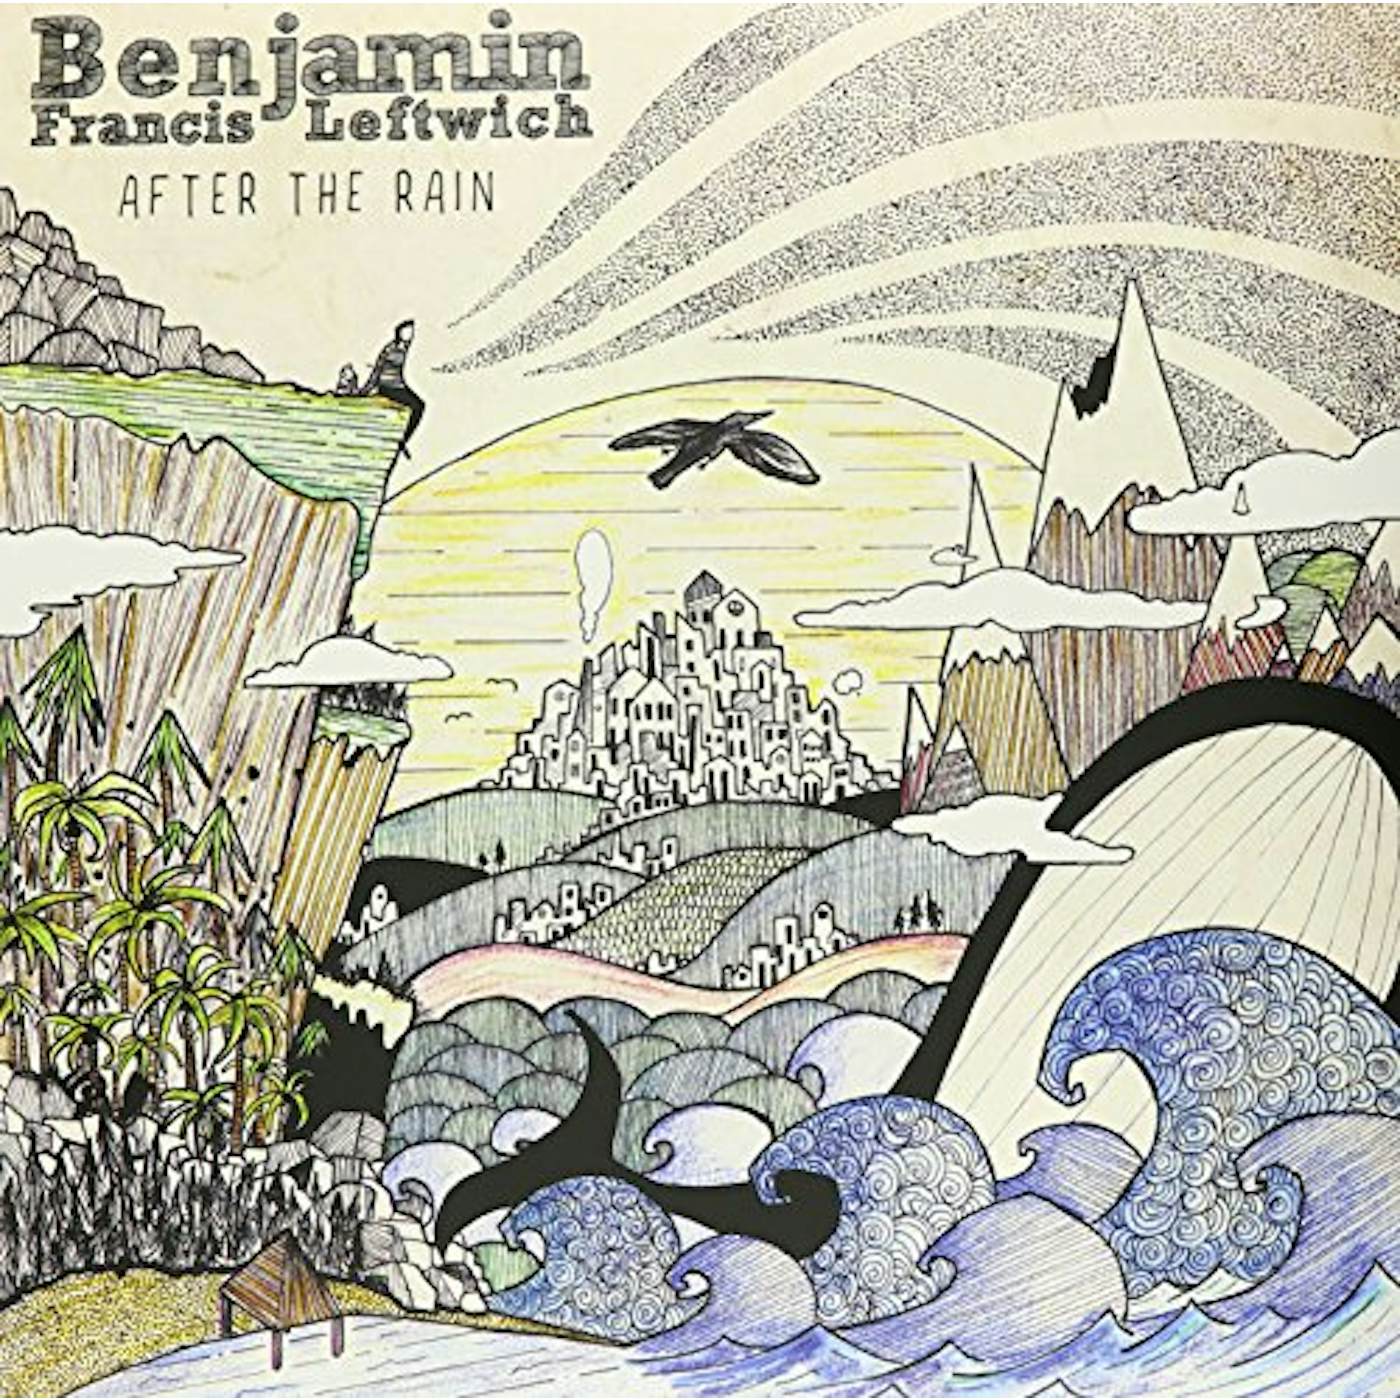 Benjamin Francis Leftwich After the Rain Vinyl Record